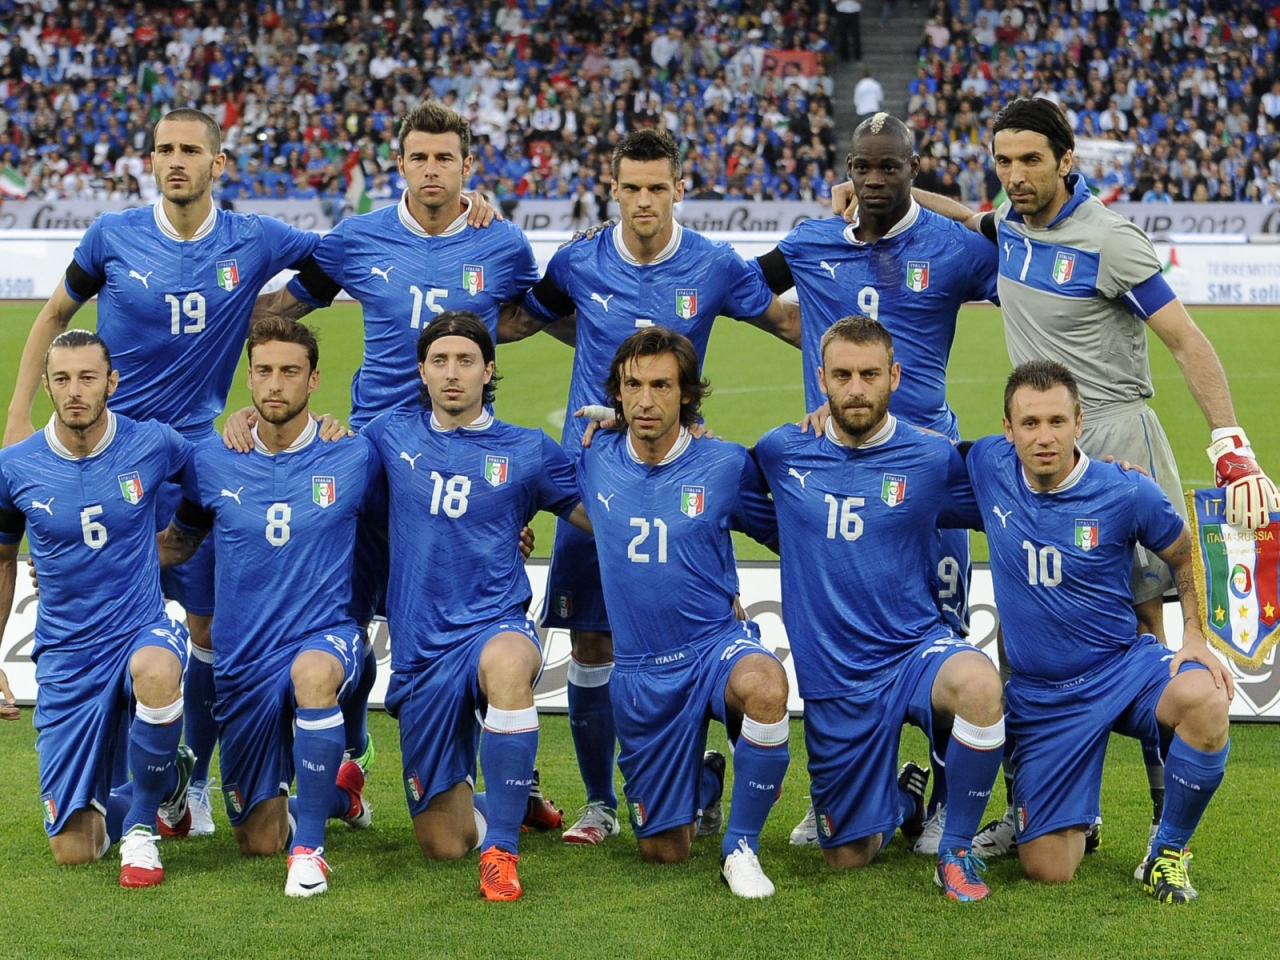 Italia National Team for 1280 x 960 resolution